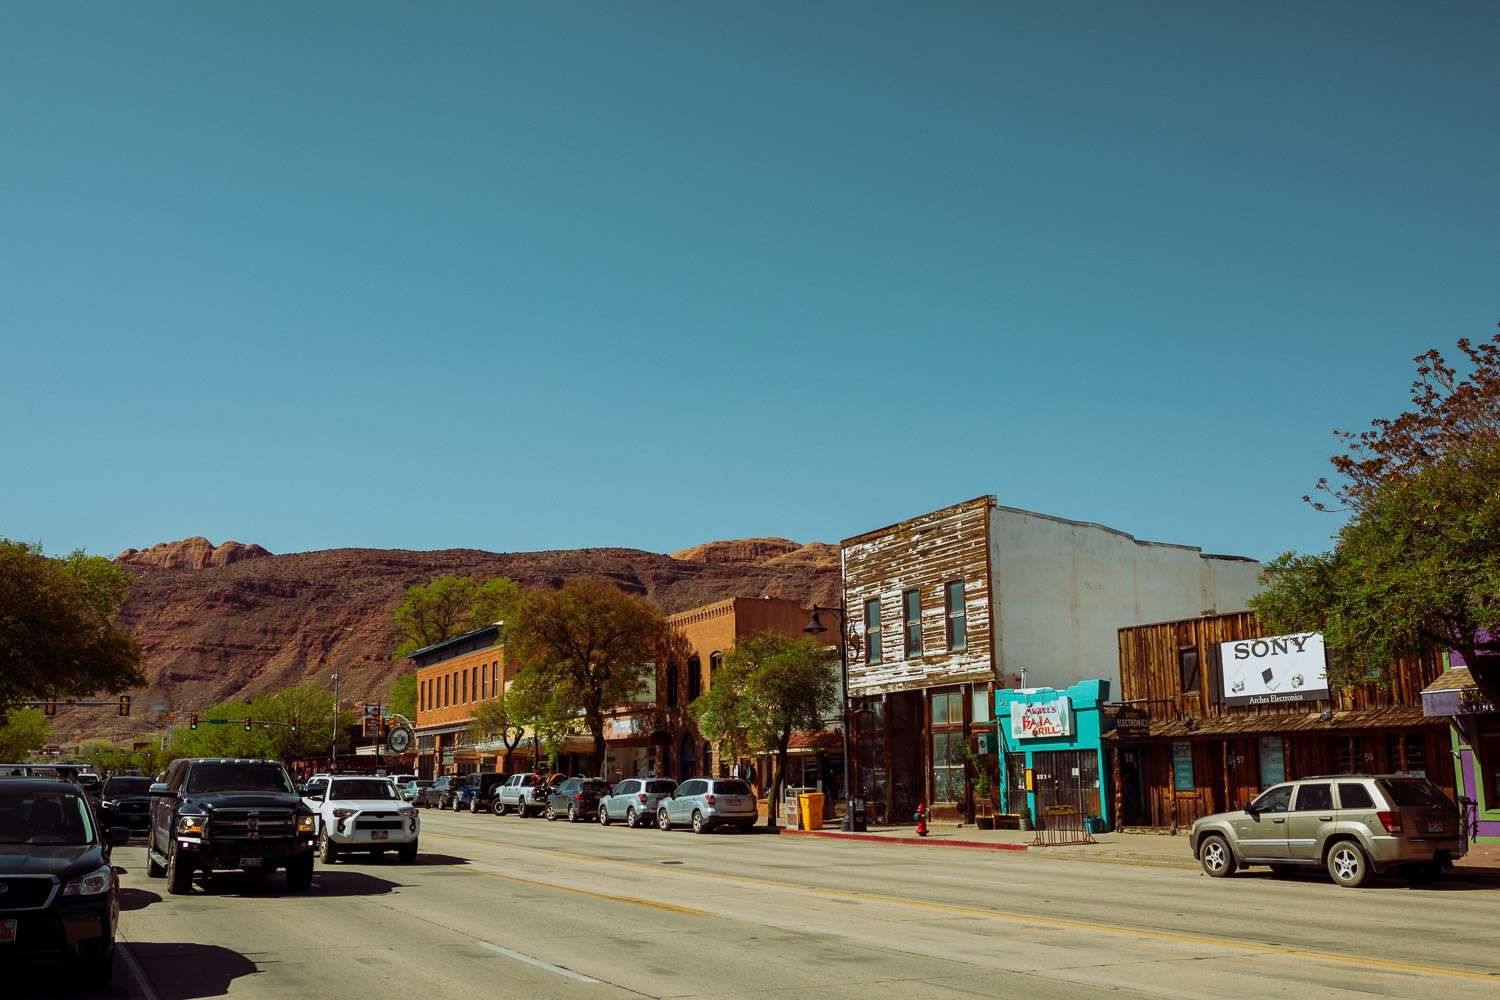 Rachel Off Duty: The Main Road in Downtown Moab, Utah